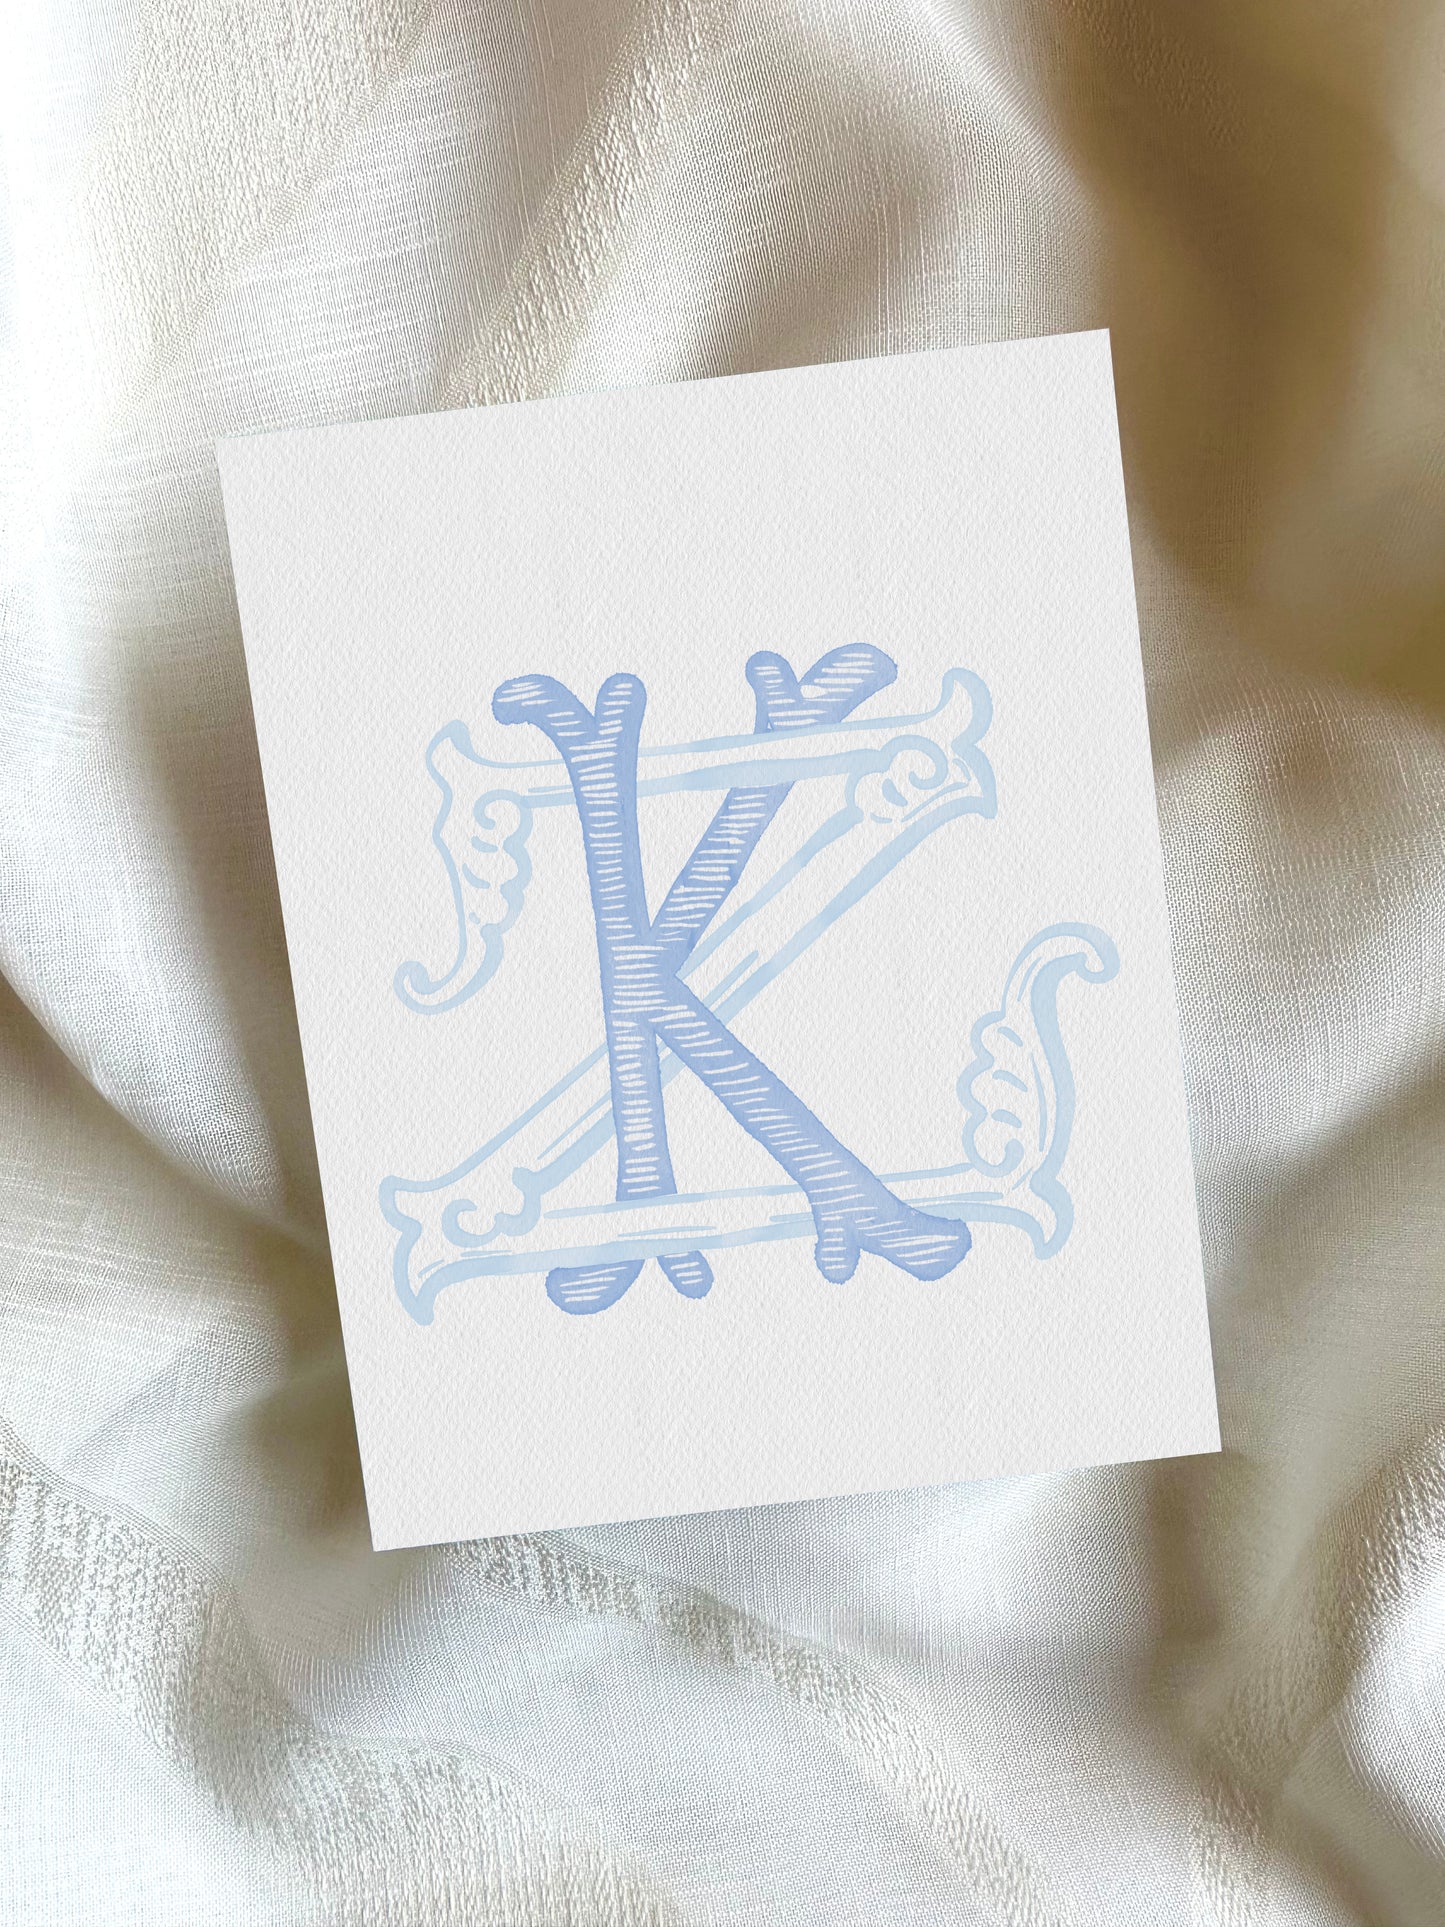 2 Letter Monogram with Letters KZ ZK | Digital Download - Wedding Monogram SVG, Personal Logo, Wedding Logo for Wedding Invitations The Wedding Crest Lab